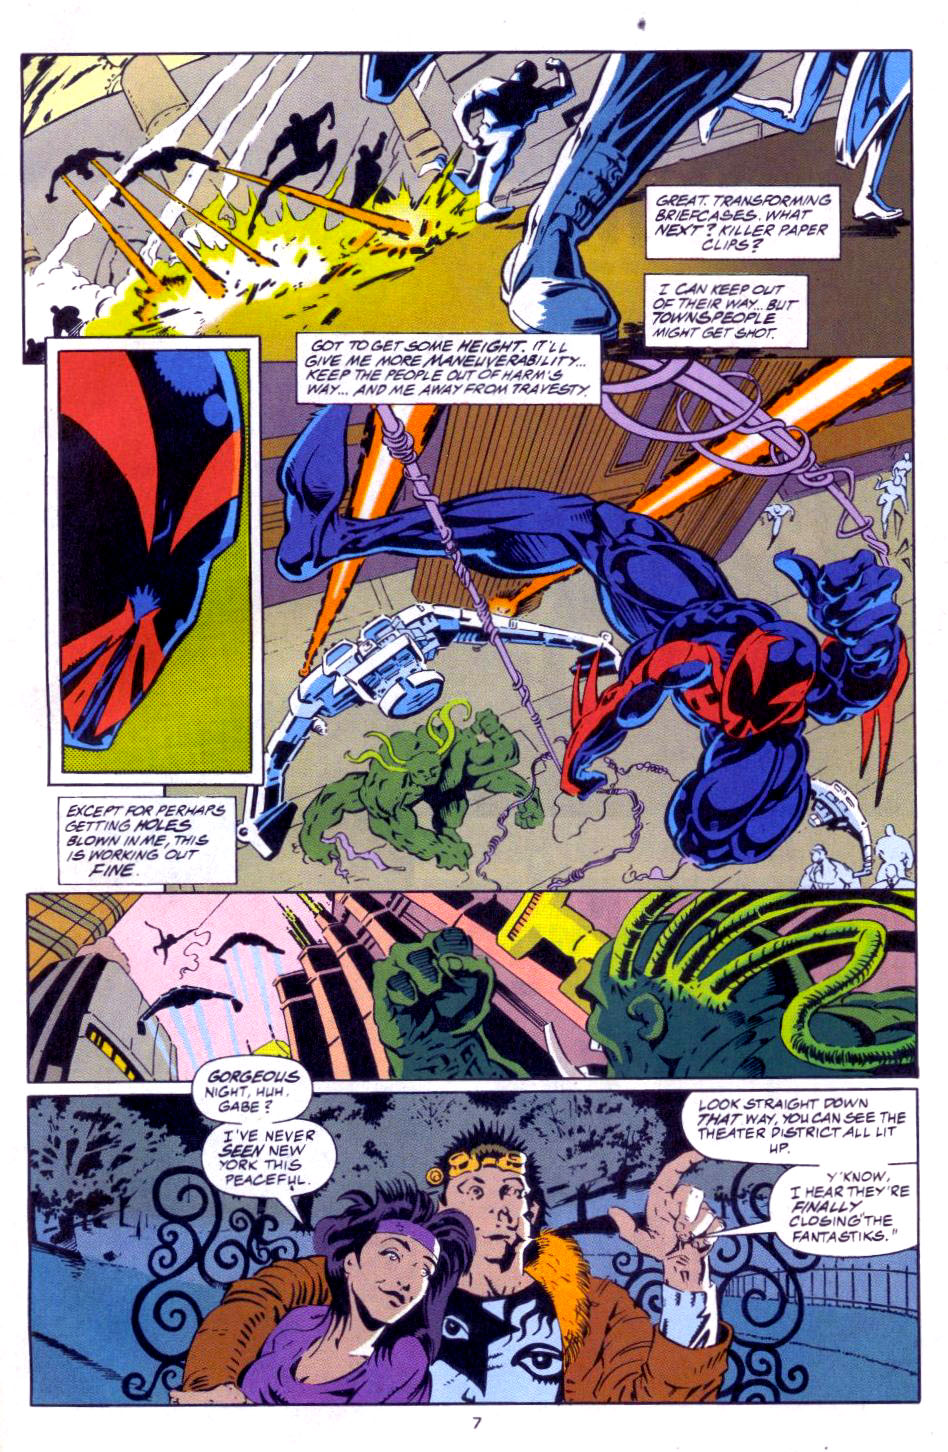 Spider-Man 2099 (1992) issue 28 - Page 7